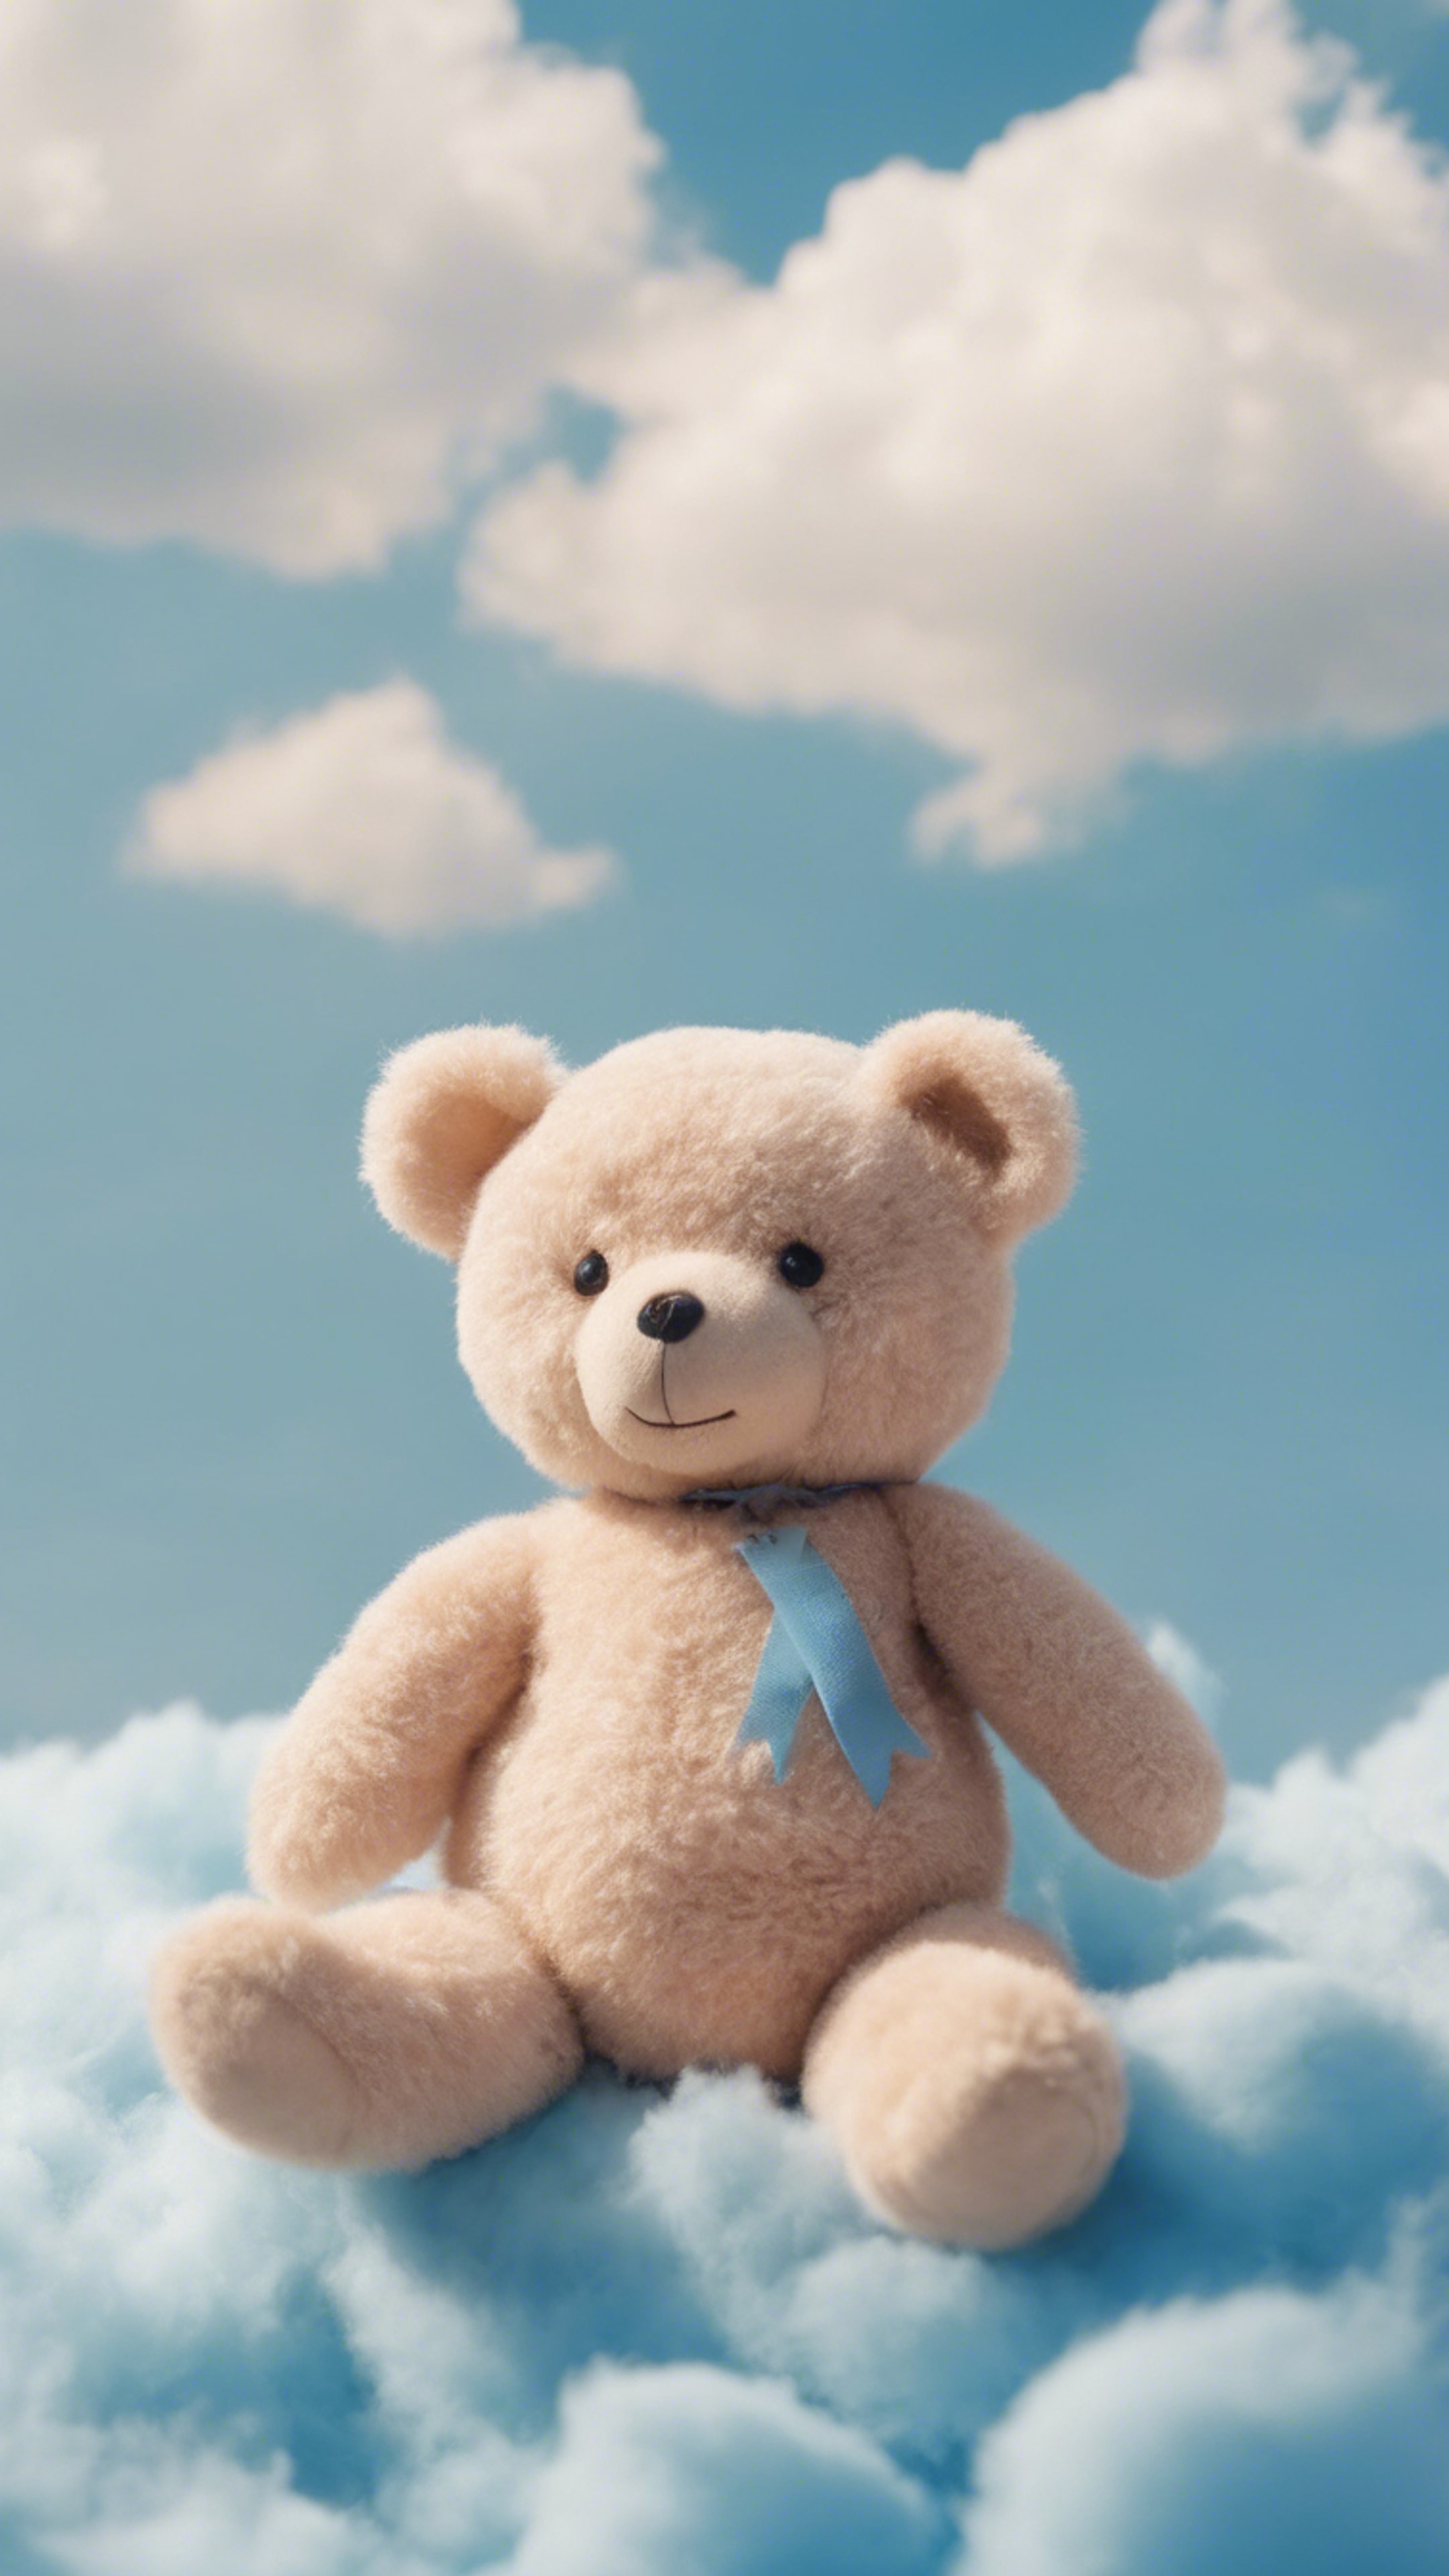 A kawaii beige teddy bear sitting on a soft fluffy cloud in a blue sky. Шпалери[56112c47d15a43519872]